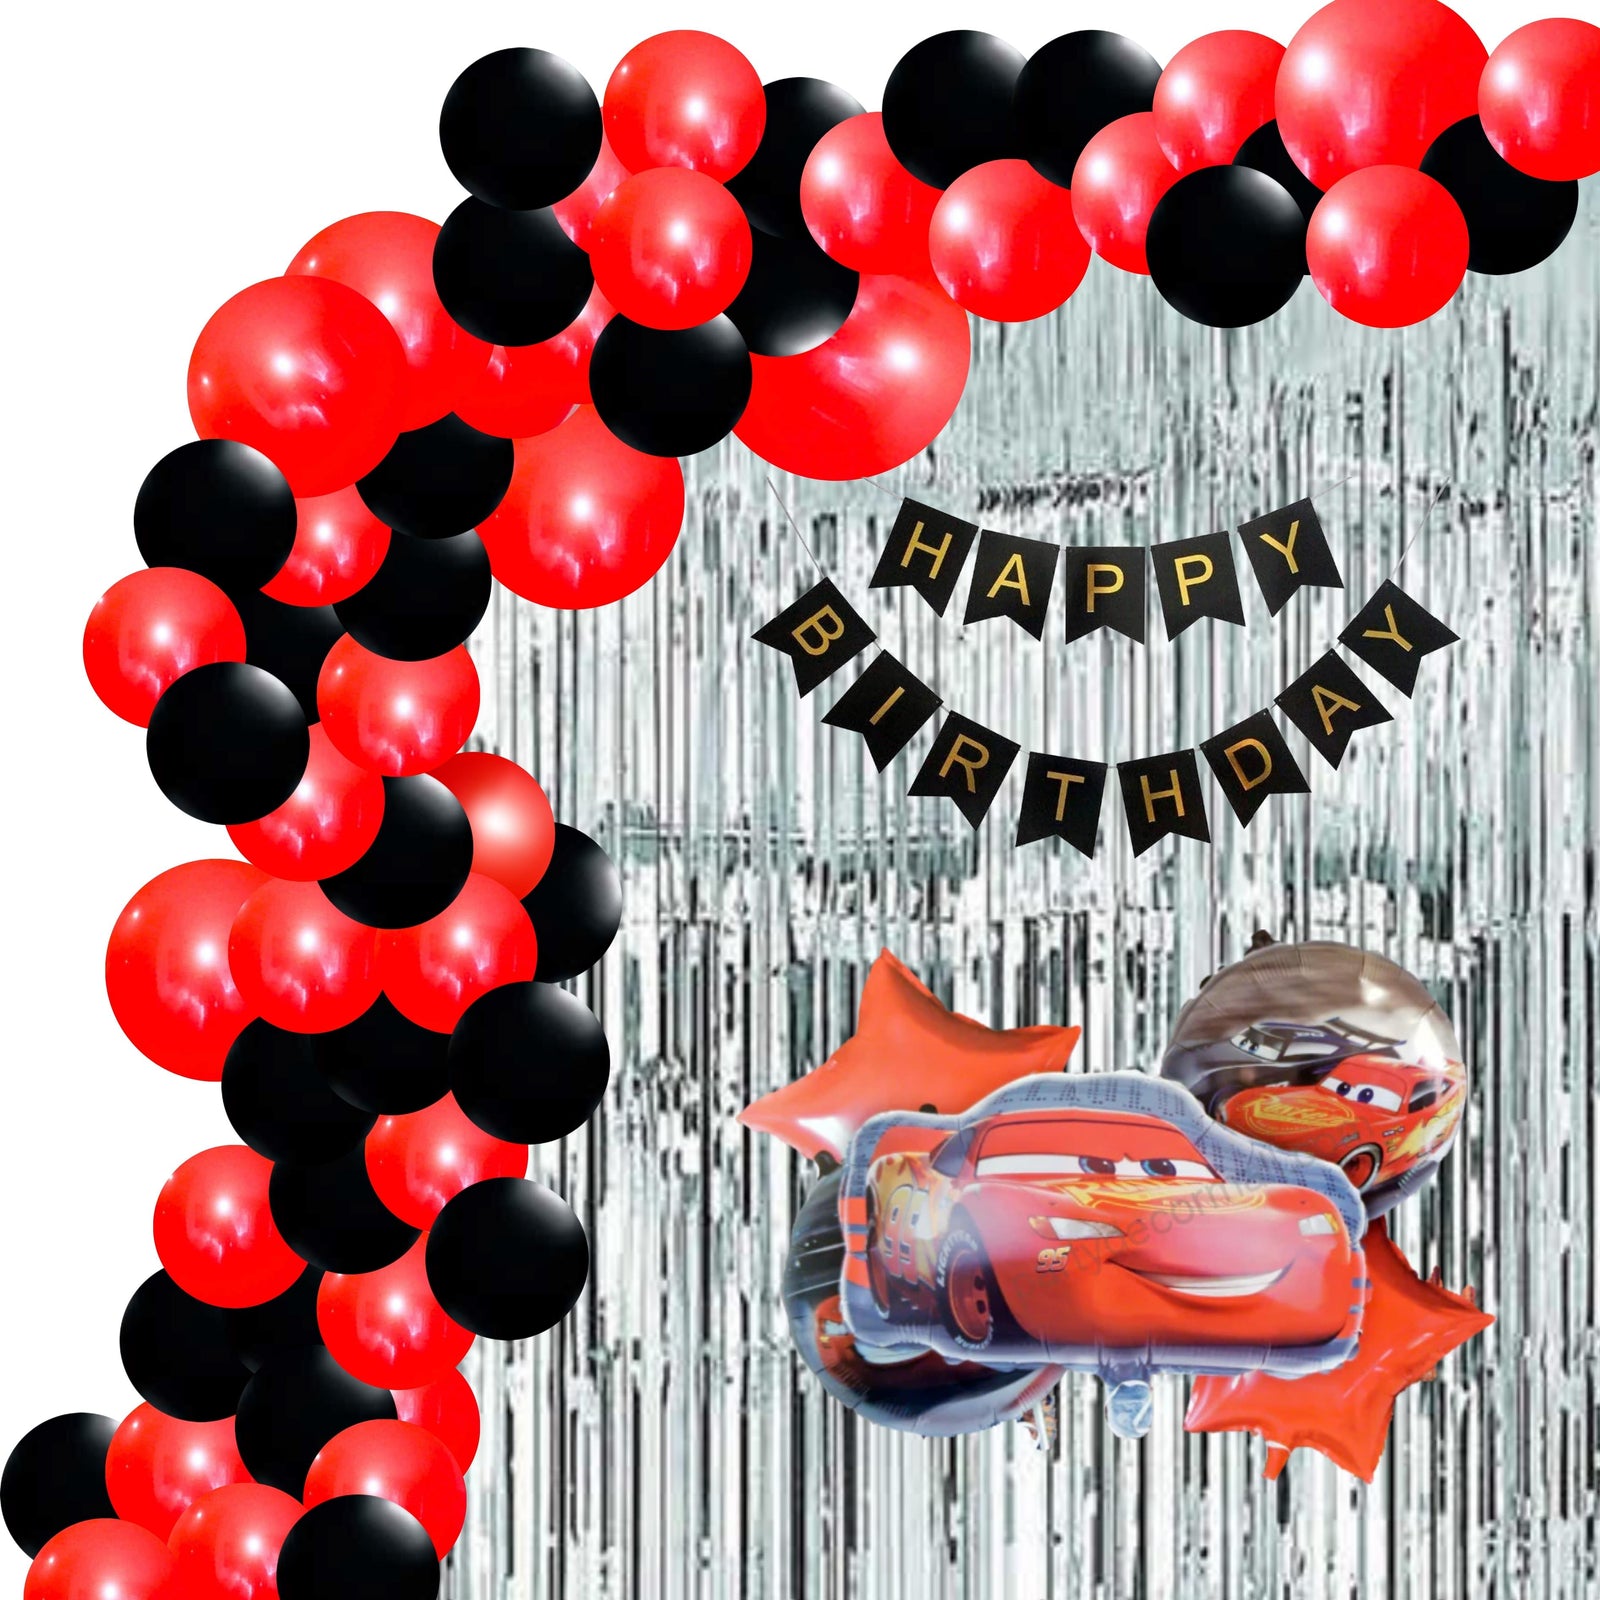 Car Theme Birthday Balloon Decoration DIY Kit (61 Pcs)